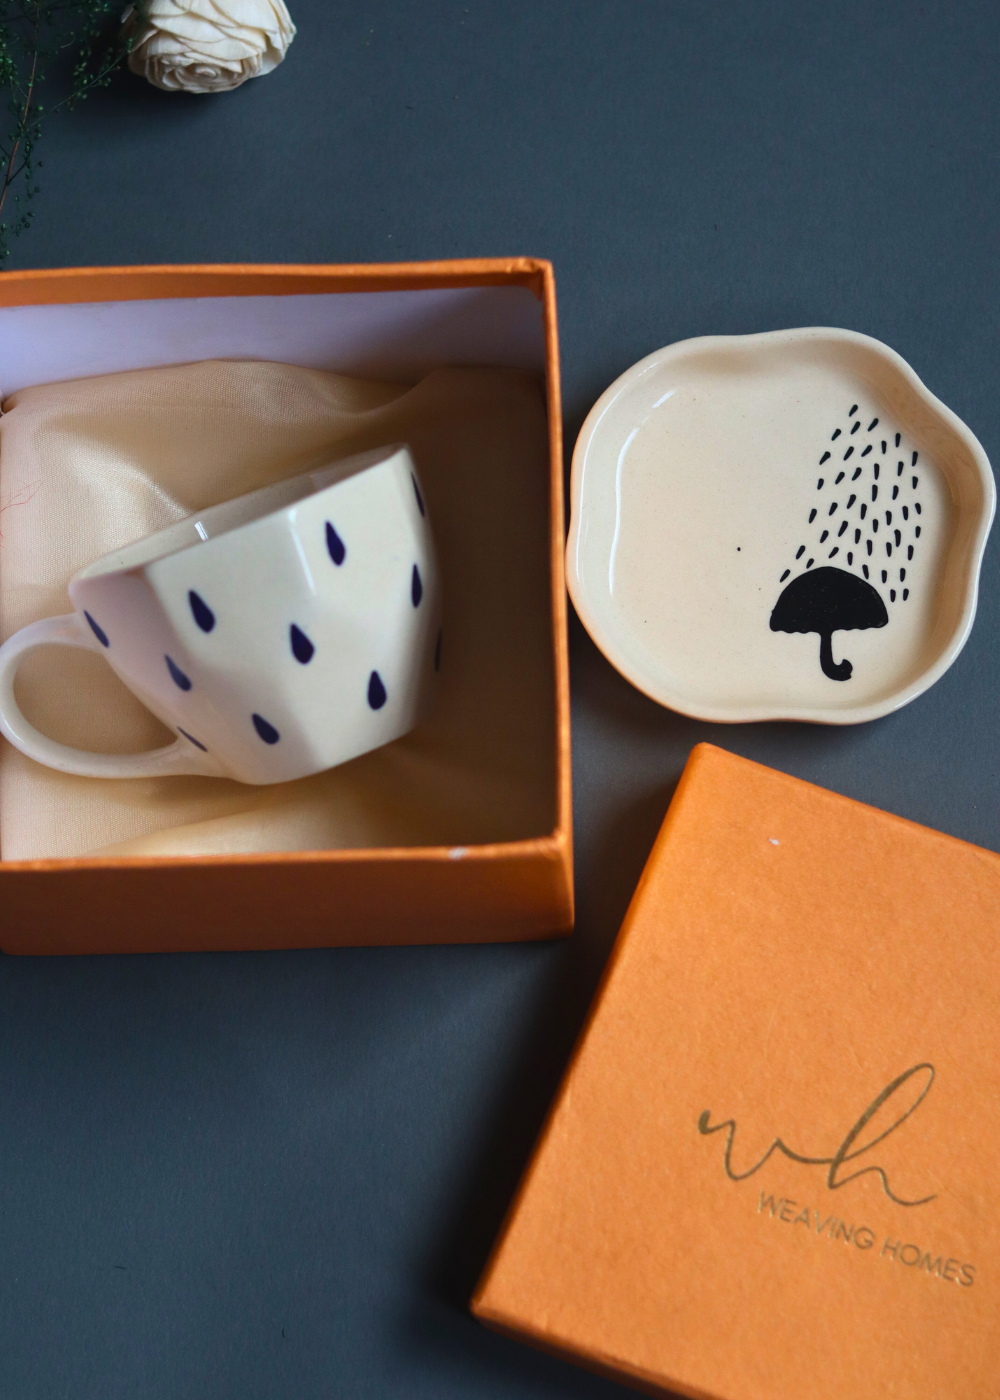 Raindrop Mug & Umbrella Dessert Plate in a gift Box